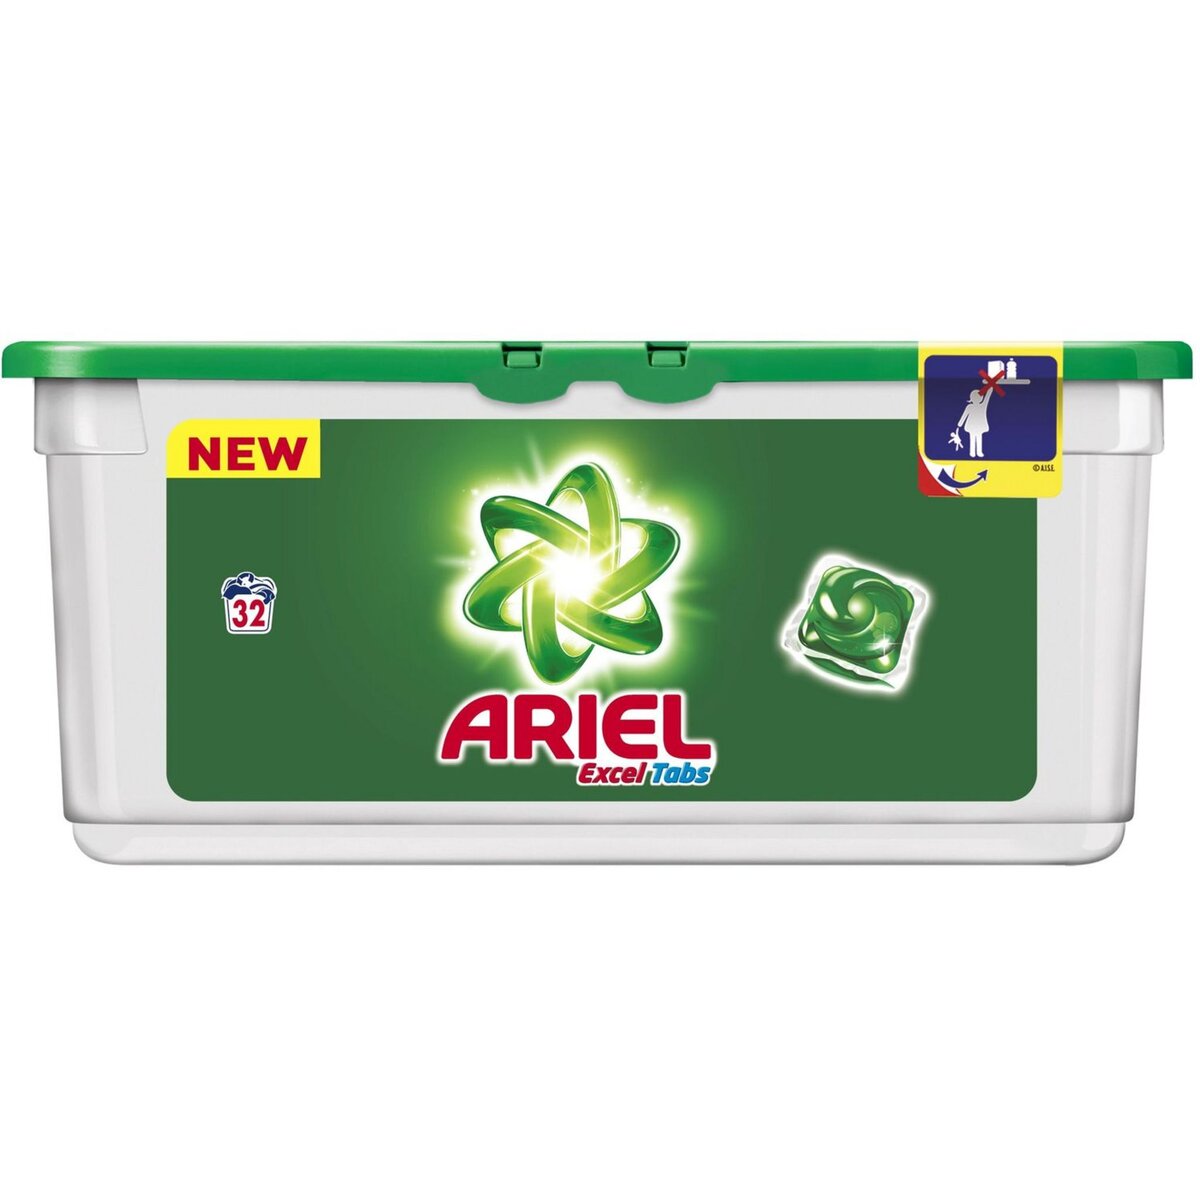 ARIEL Ariel Excel Tabs Lessive capsules 32 lavages 32 lavages 32 capsules